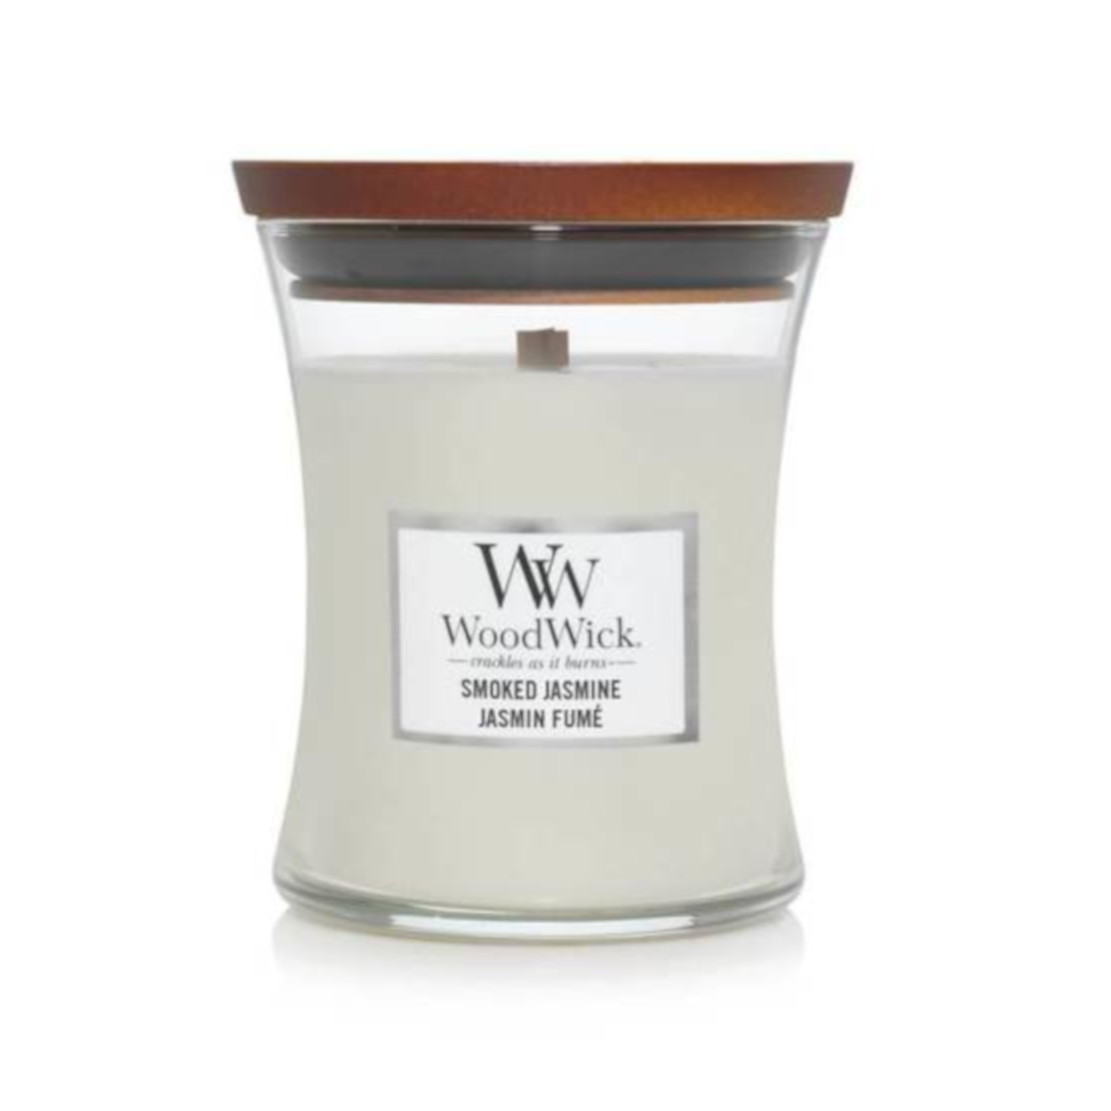 Woodwick Smoked Jasmine Medium Jar Candle